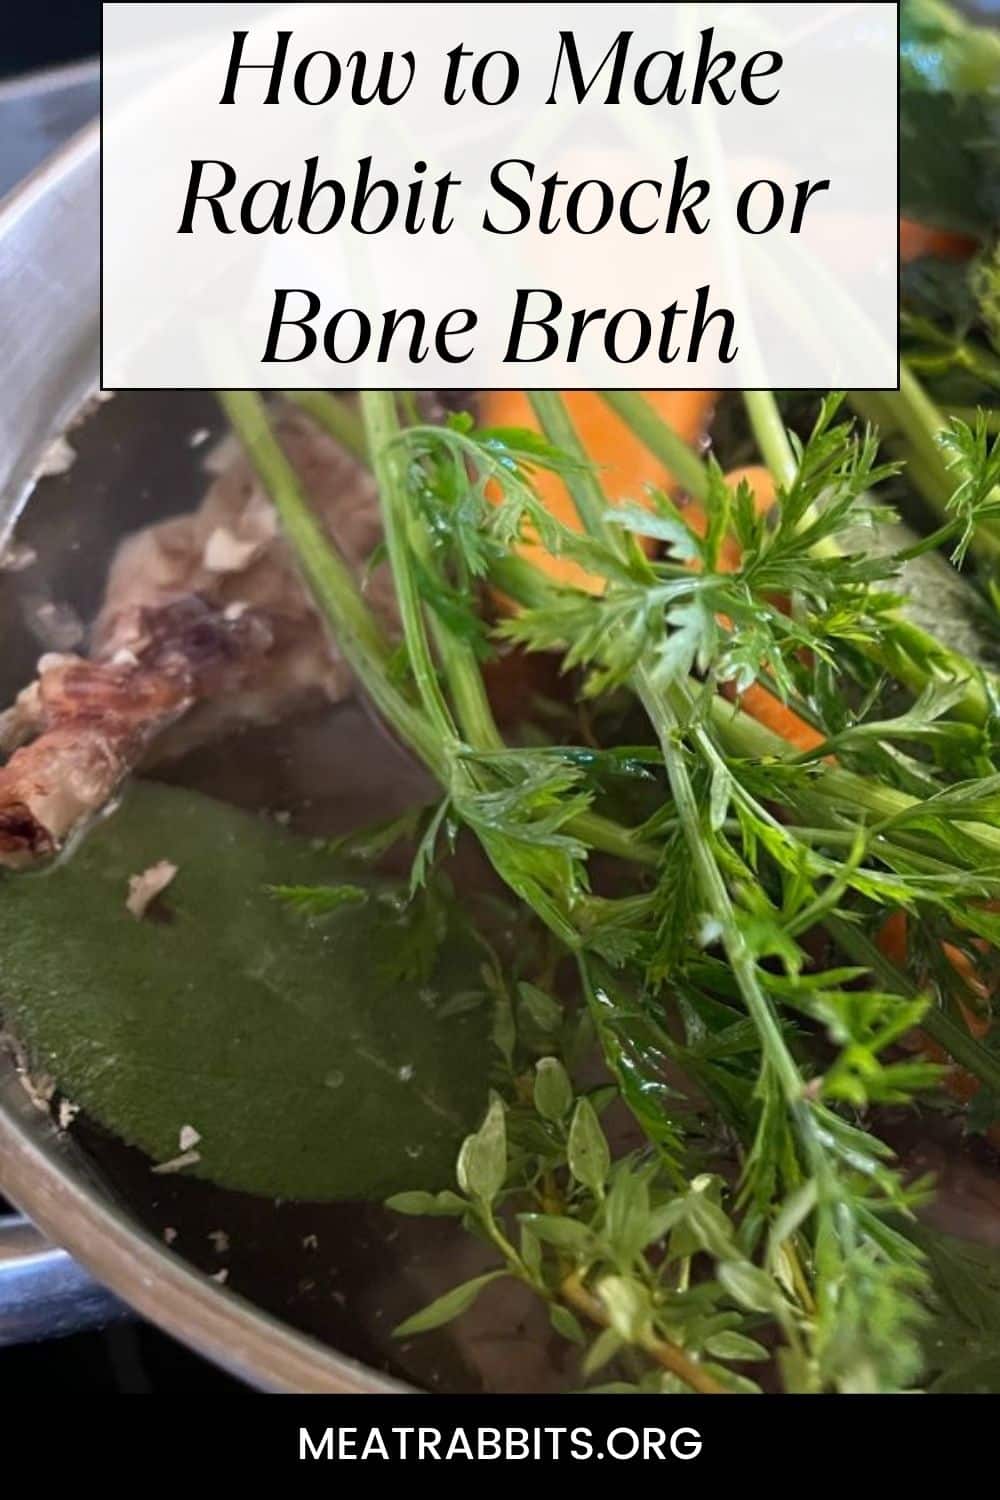 How to Make Rabbit Stock or Bone Broth pinterest image.